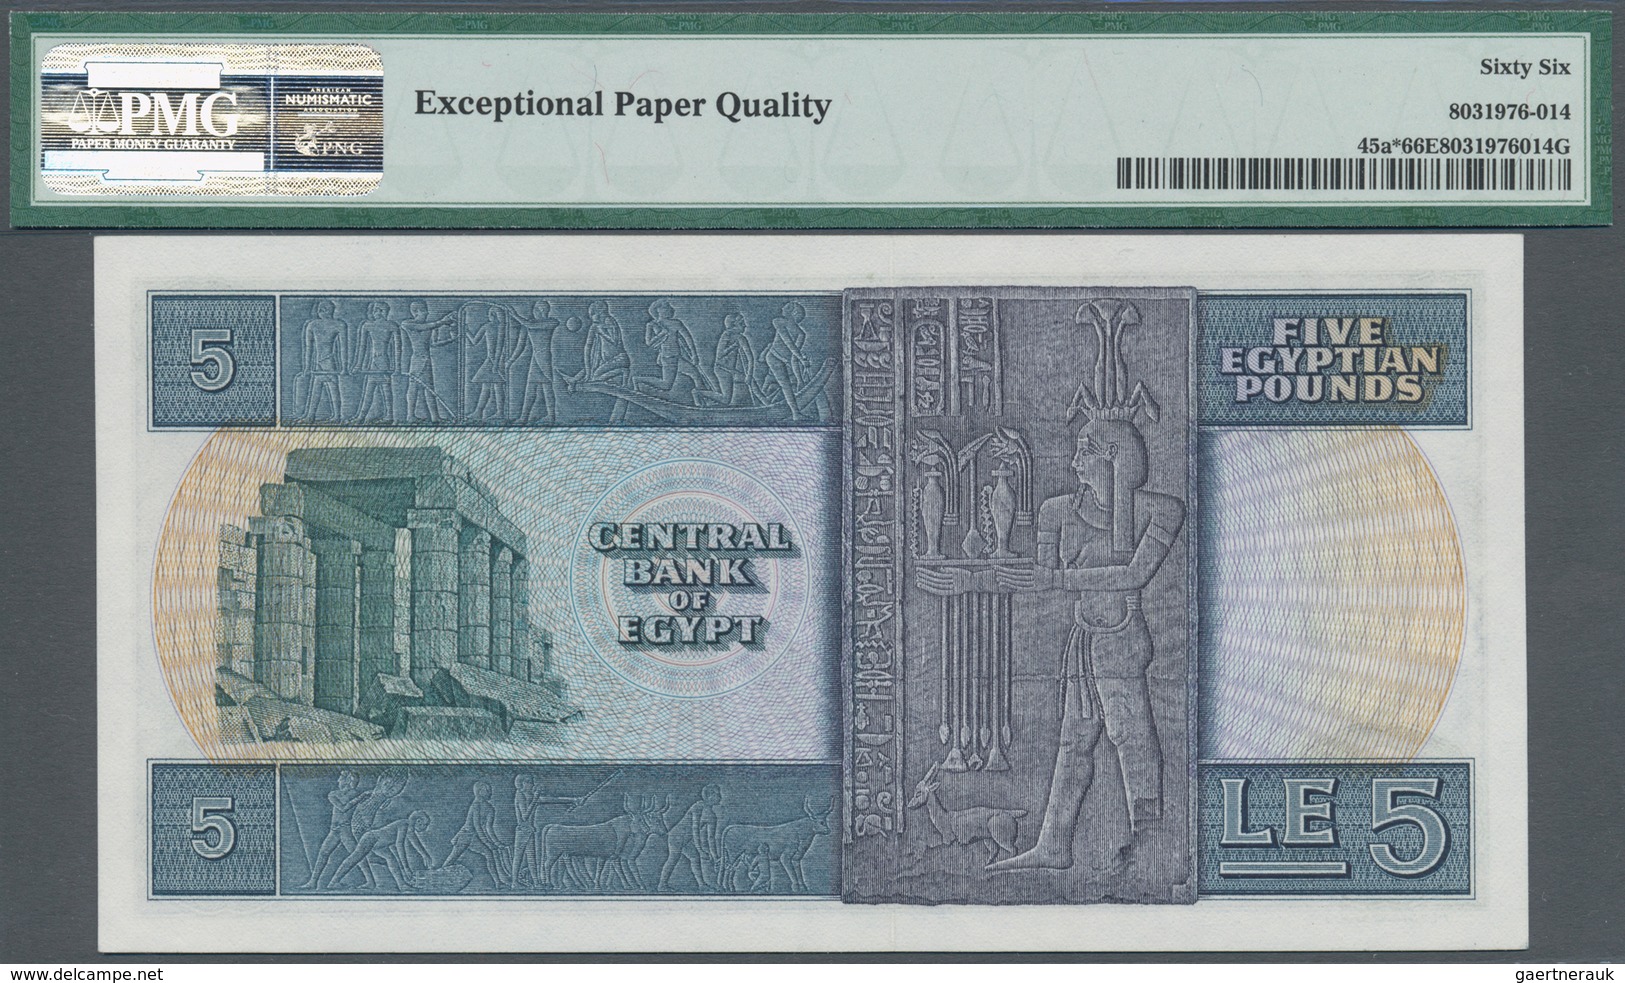 Egypt / Ägypten: 5 Pounds 1976 P. 45a Replacement Banknote With "I" Prefix, Crisp Original Banknote - Egipto